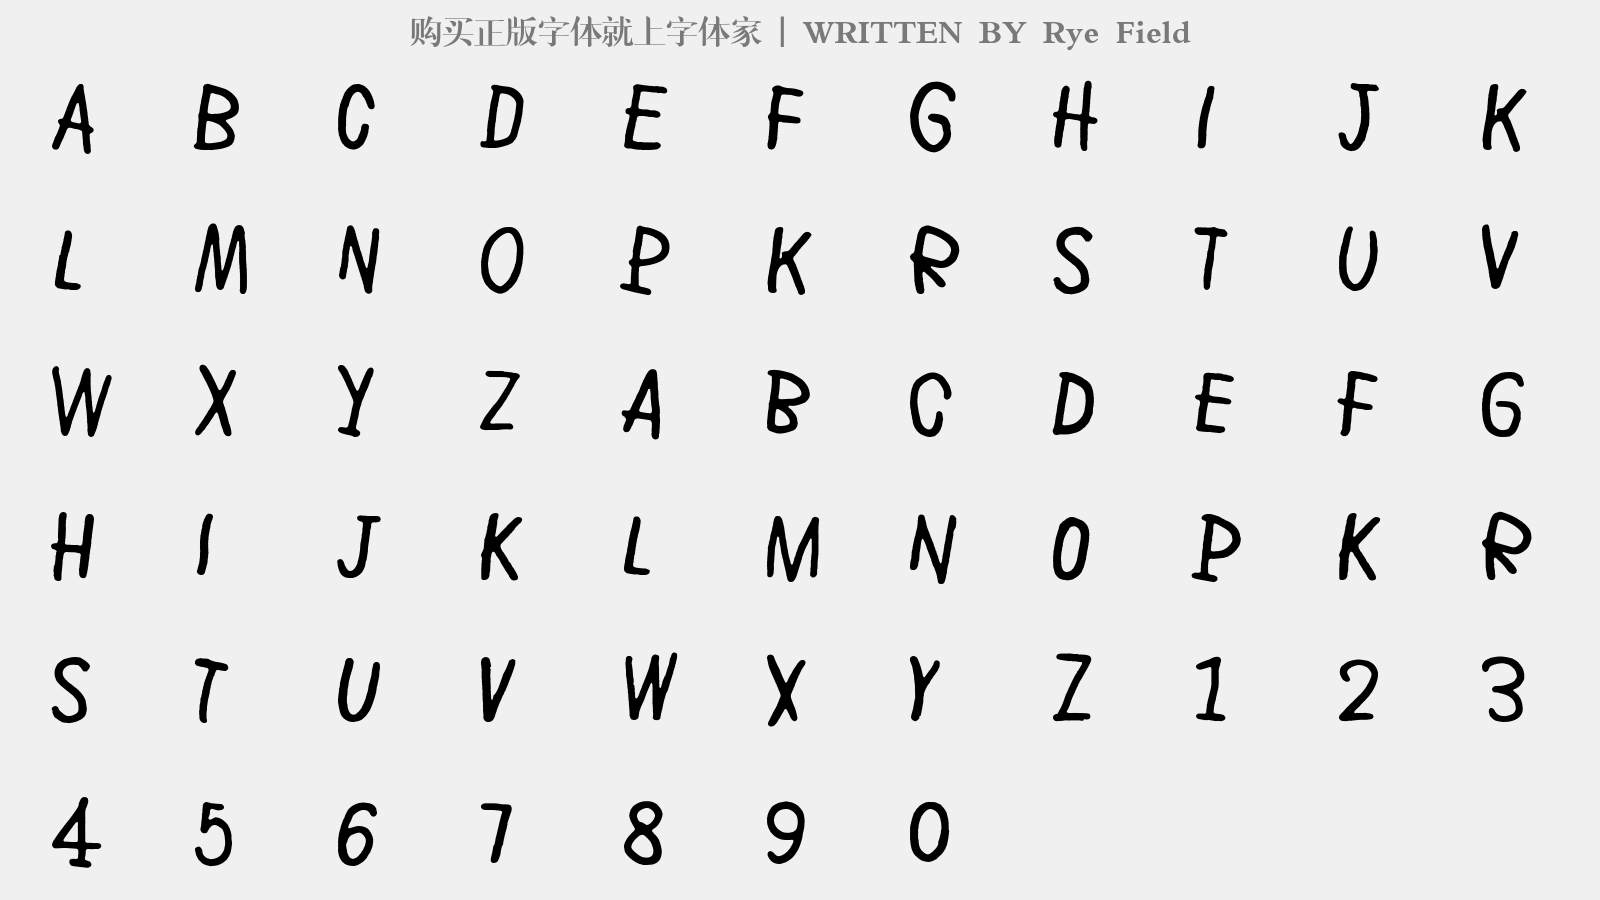 Rye Field - 大写字母/小写字母/数字